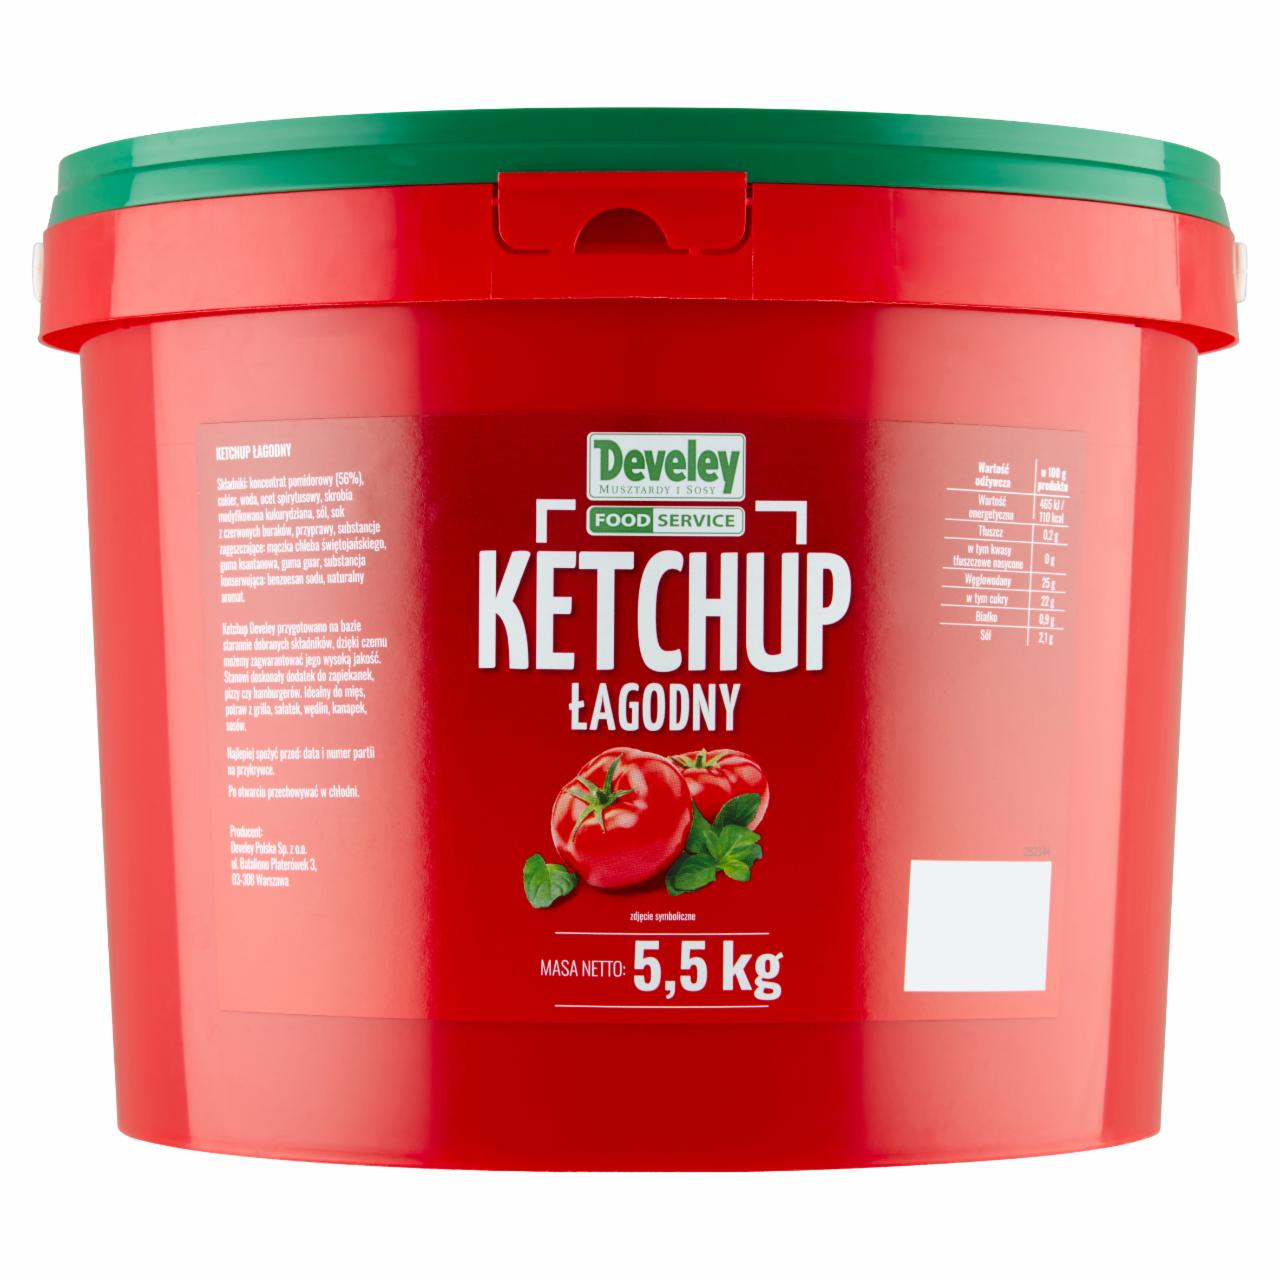 Zdjęcia - Develey Food Service Ketchup łagodny 5,5 kg